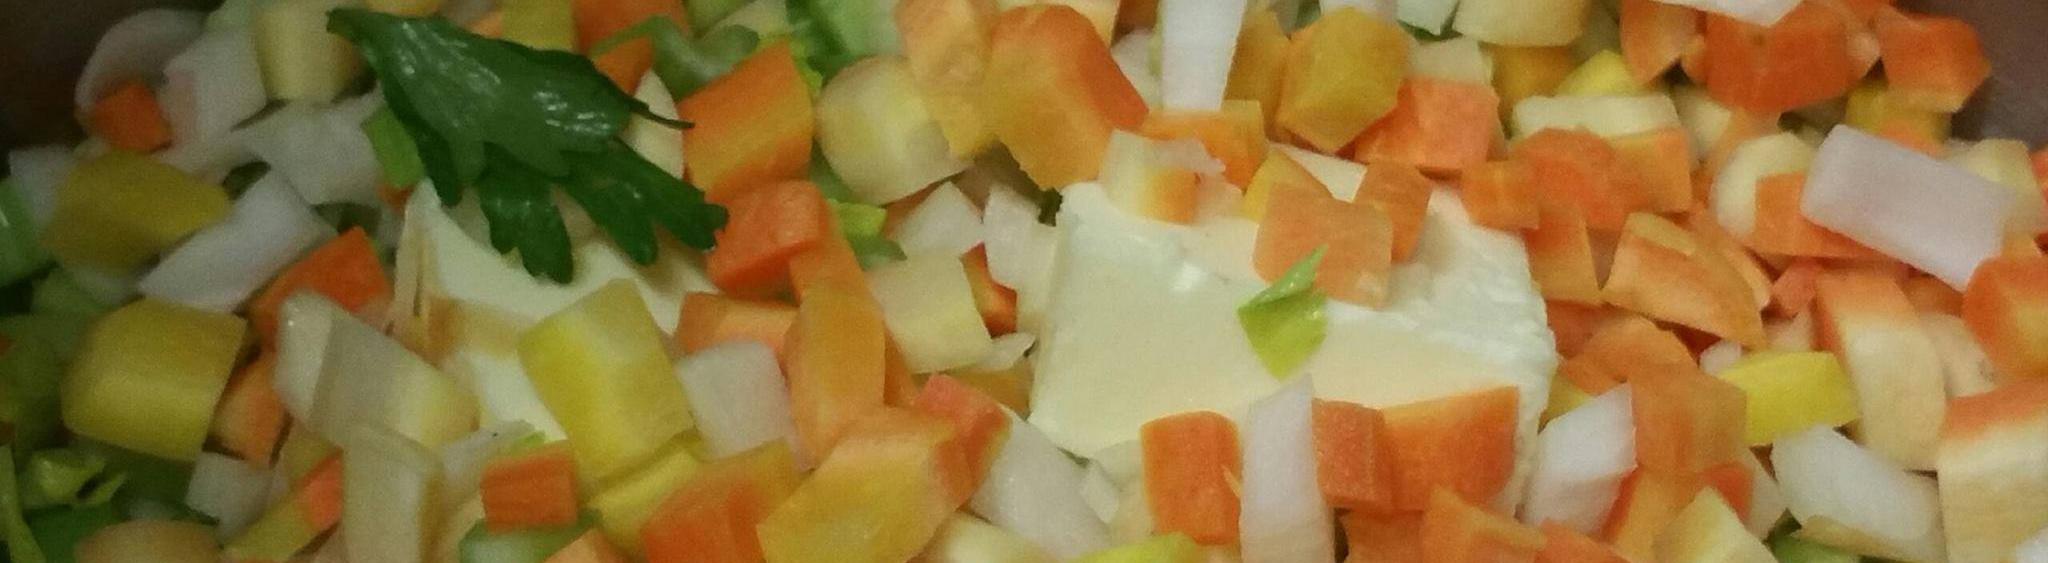 Fresh cut vegetable for soup